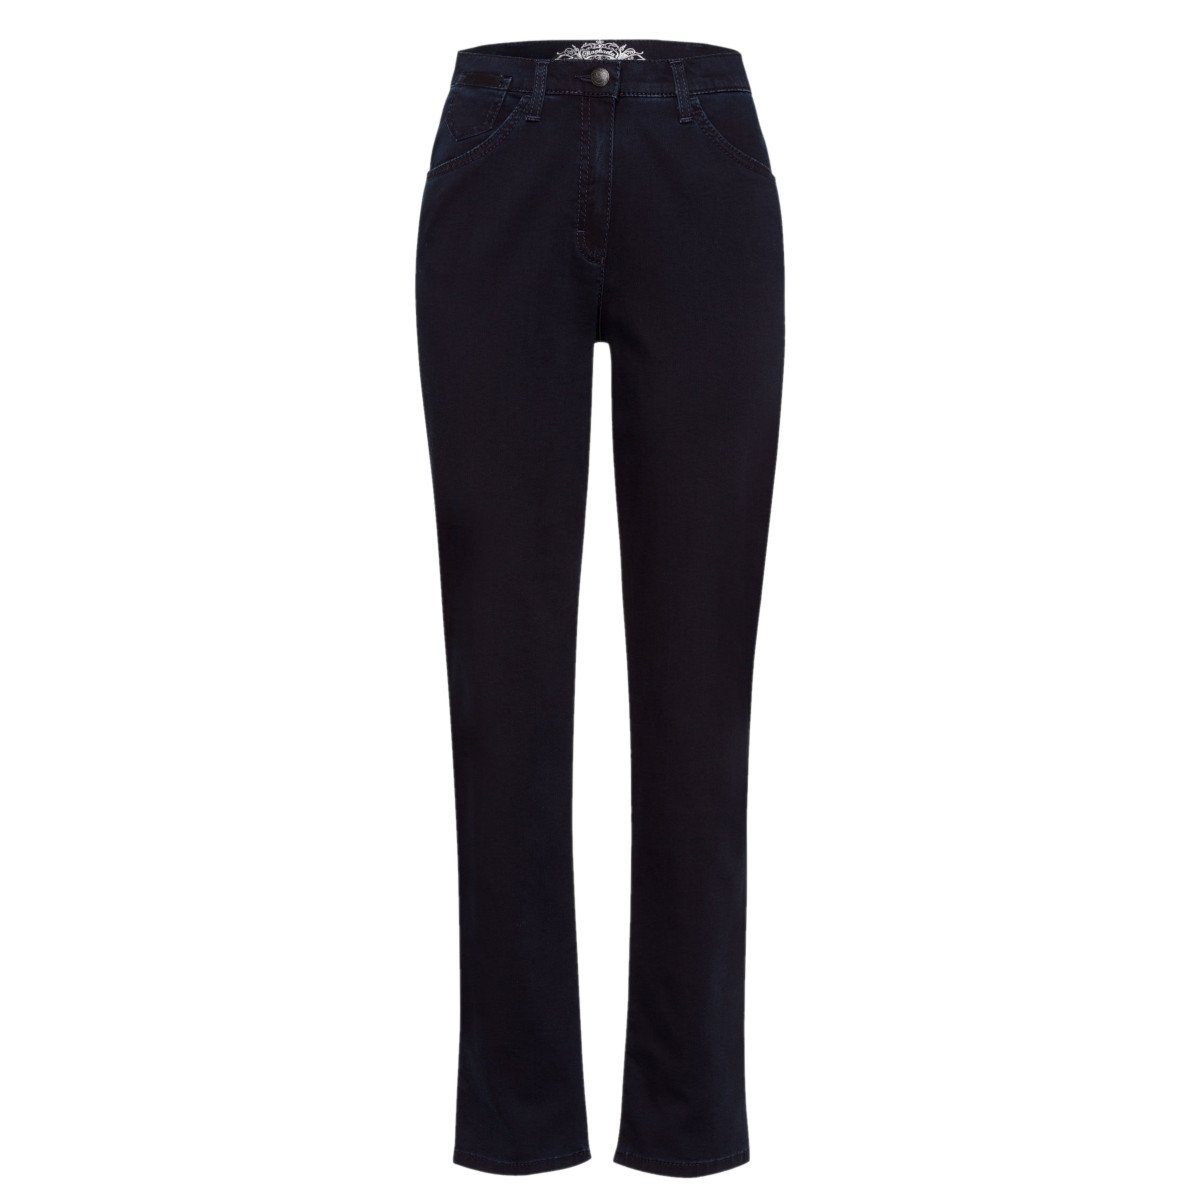 by (22) 5-Pocket-Jeans COMFORT Corry blau FIT BRAX Fay (14-6227) Plus dunkel RAPHAELA Comfort